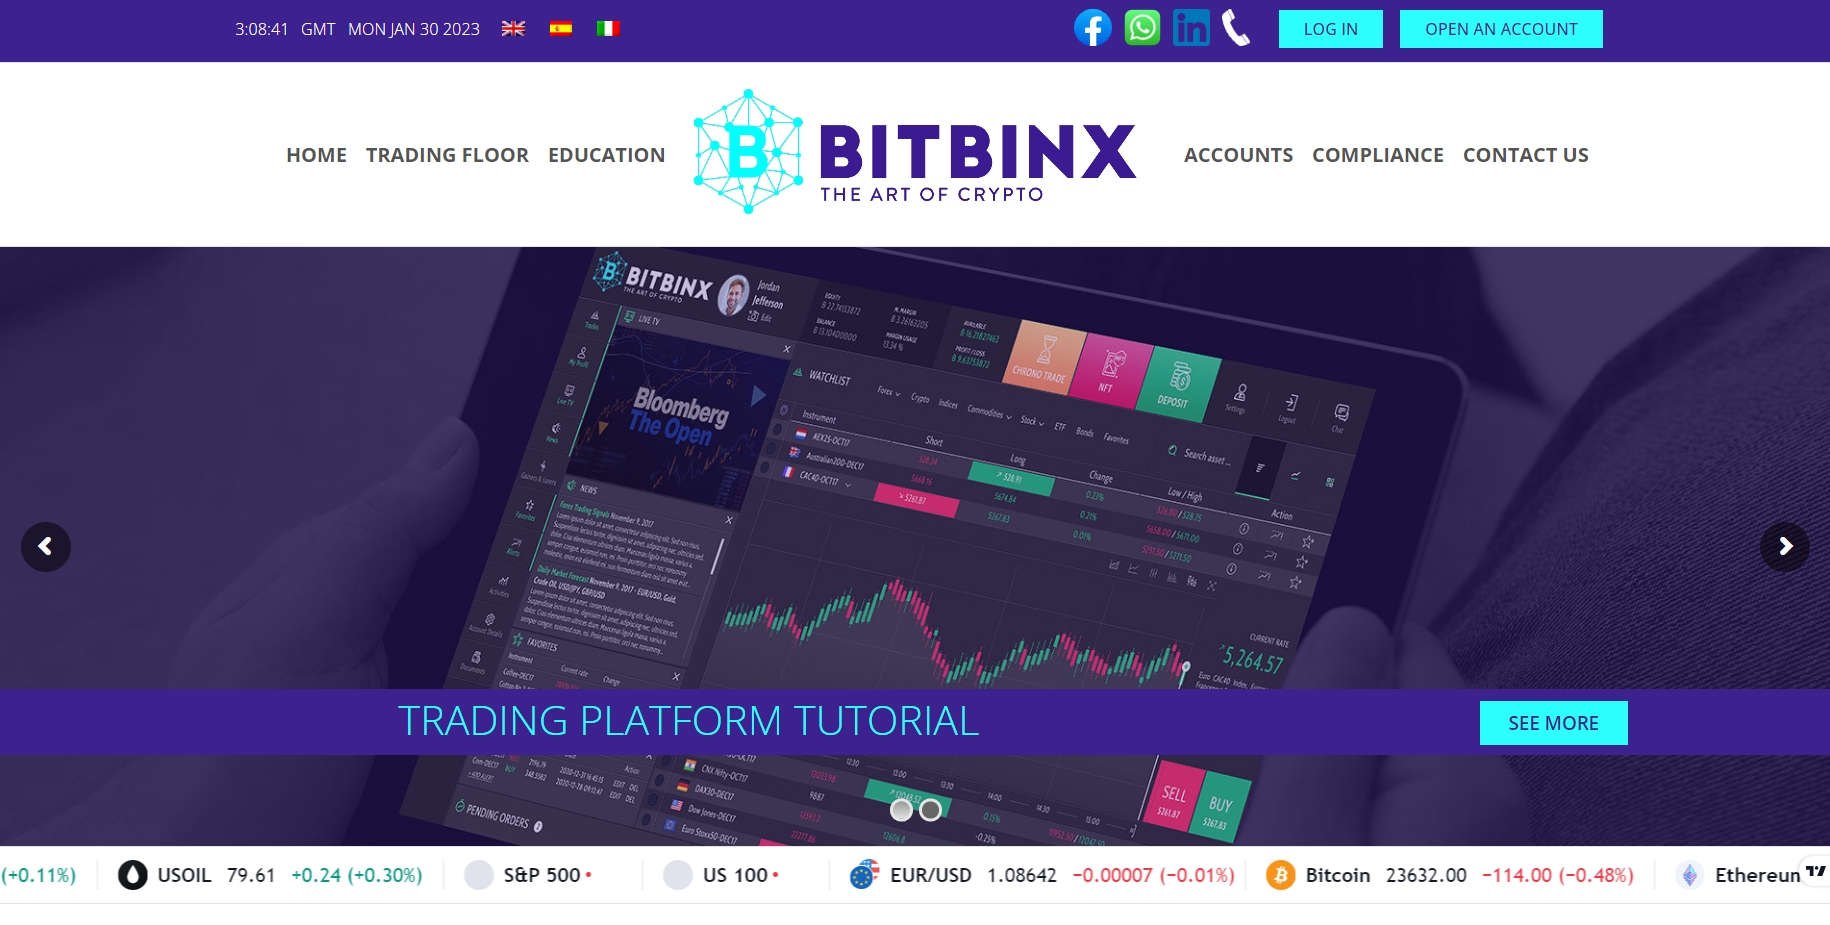 Bitbinx homepage